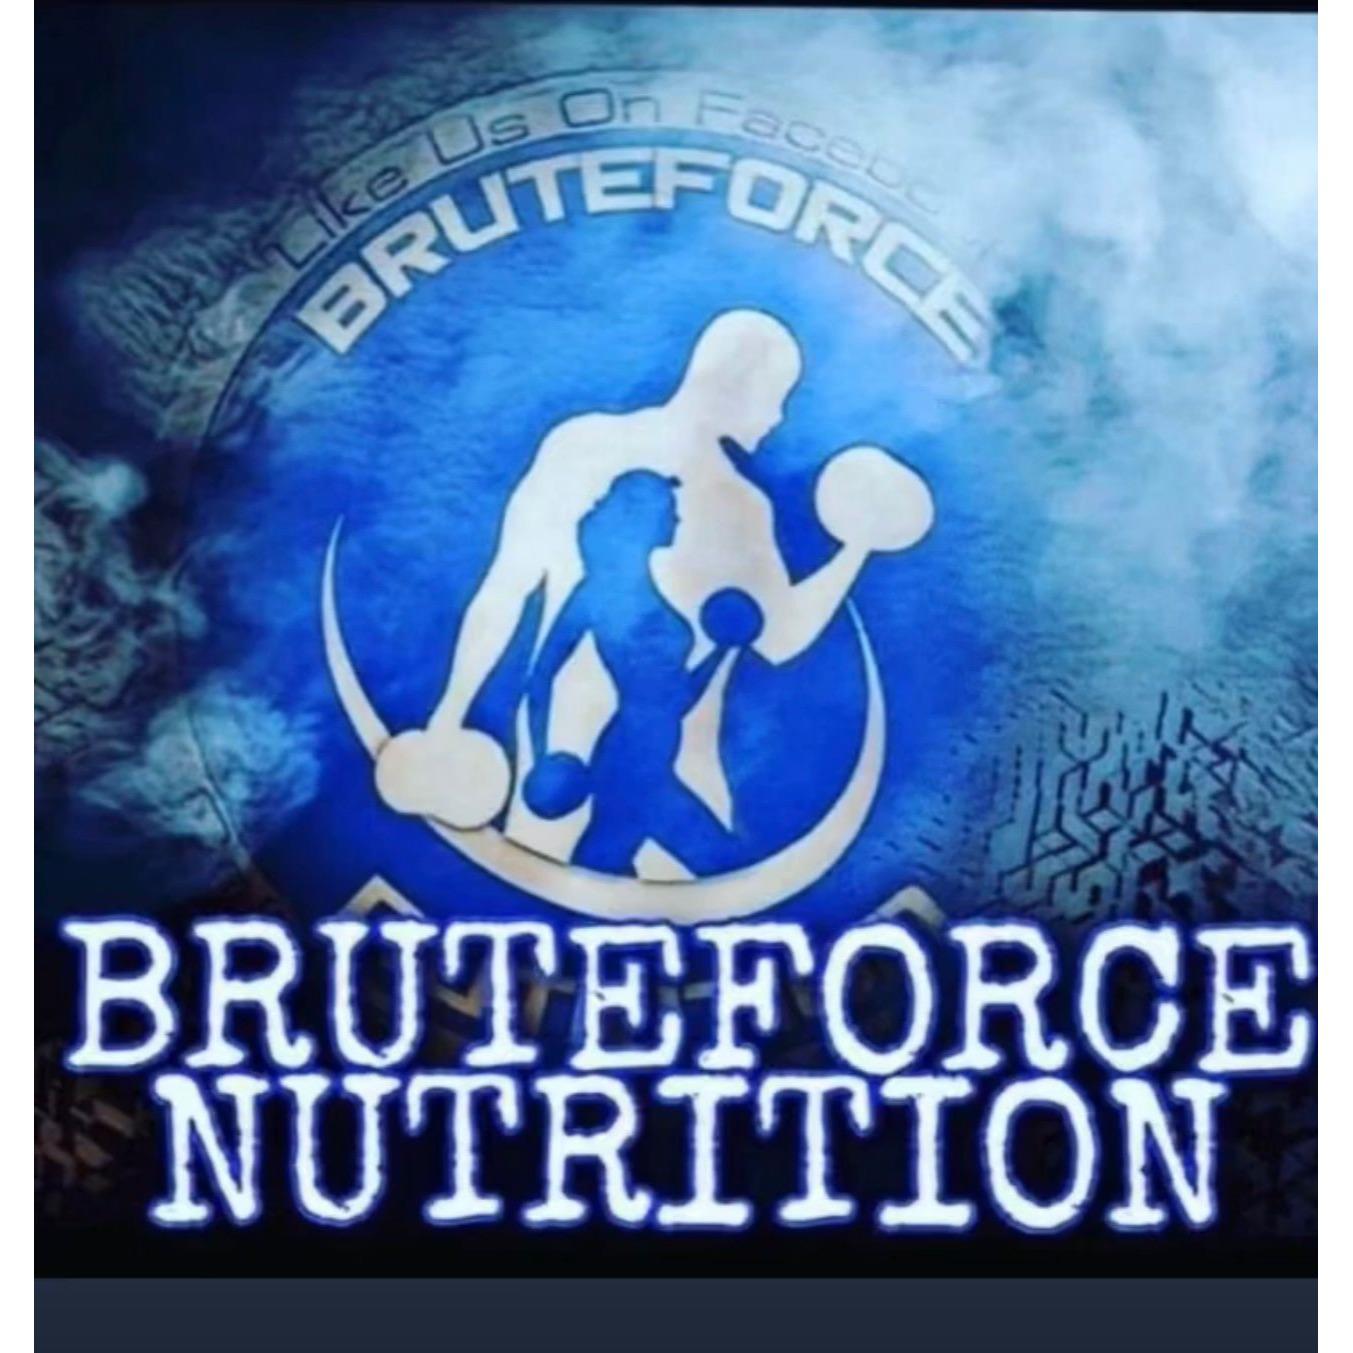 Bruteforce Nutrition